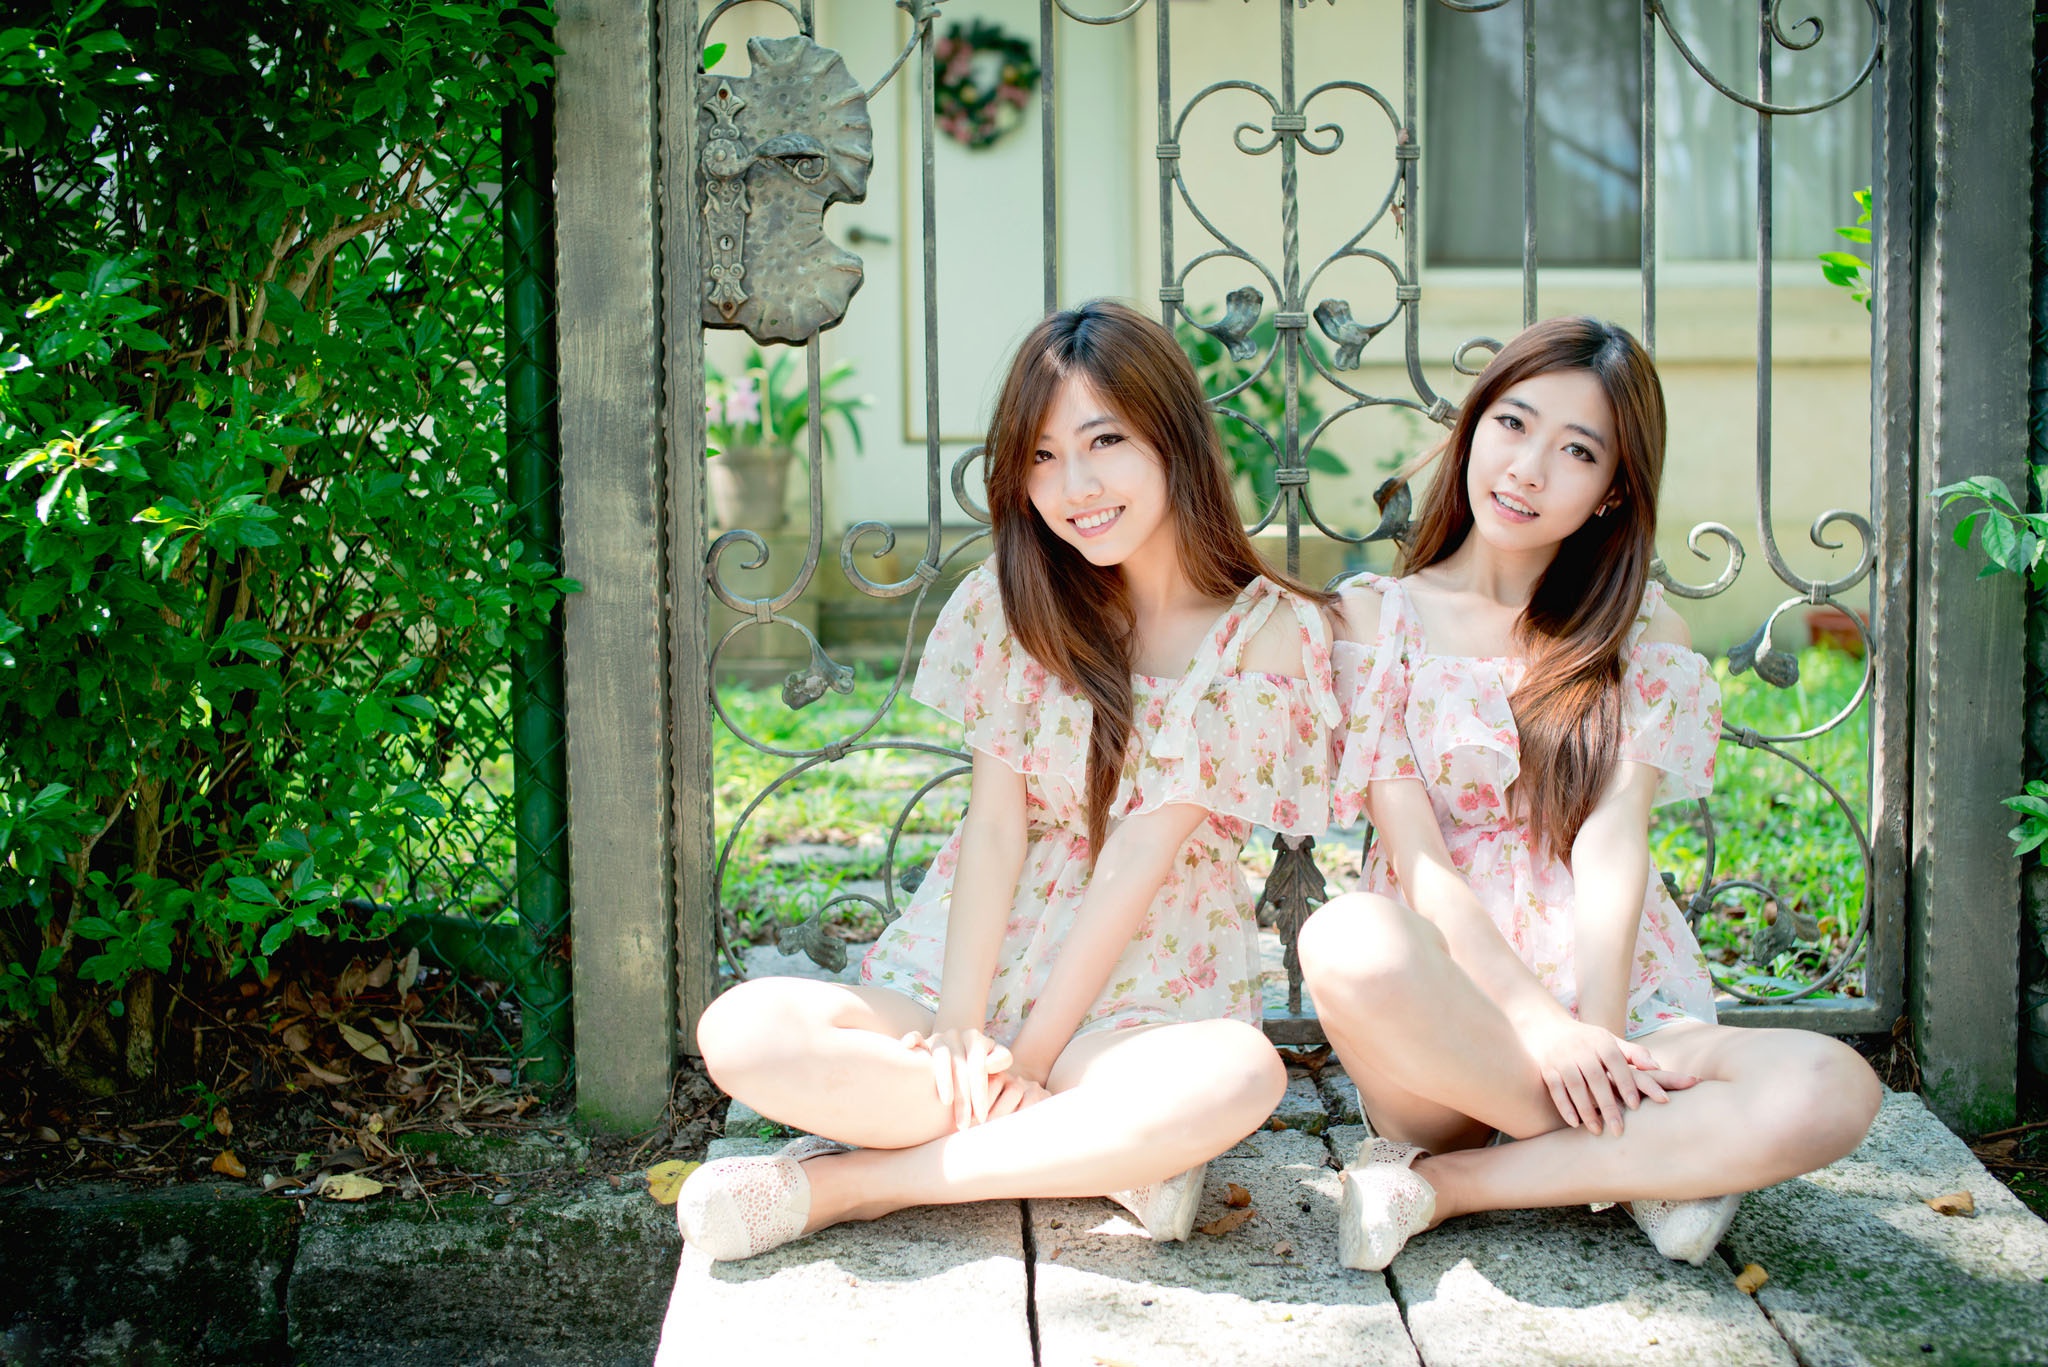 Asian Model Women Long Hair Dark Hair Sitting Legs Crossed Flower Dress Bushes Depth Of Field House  2048x1367